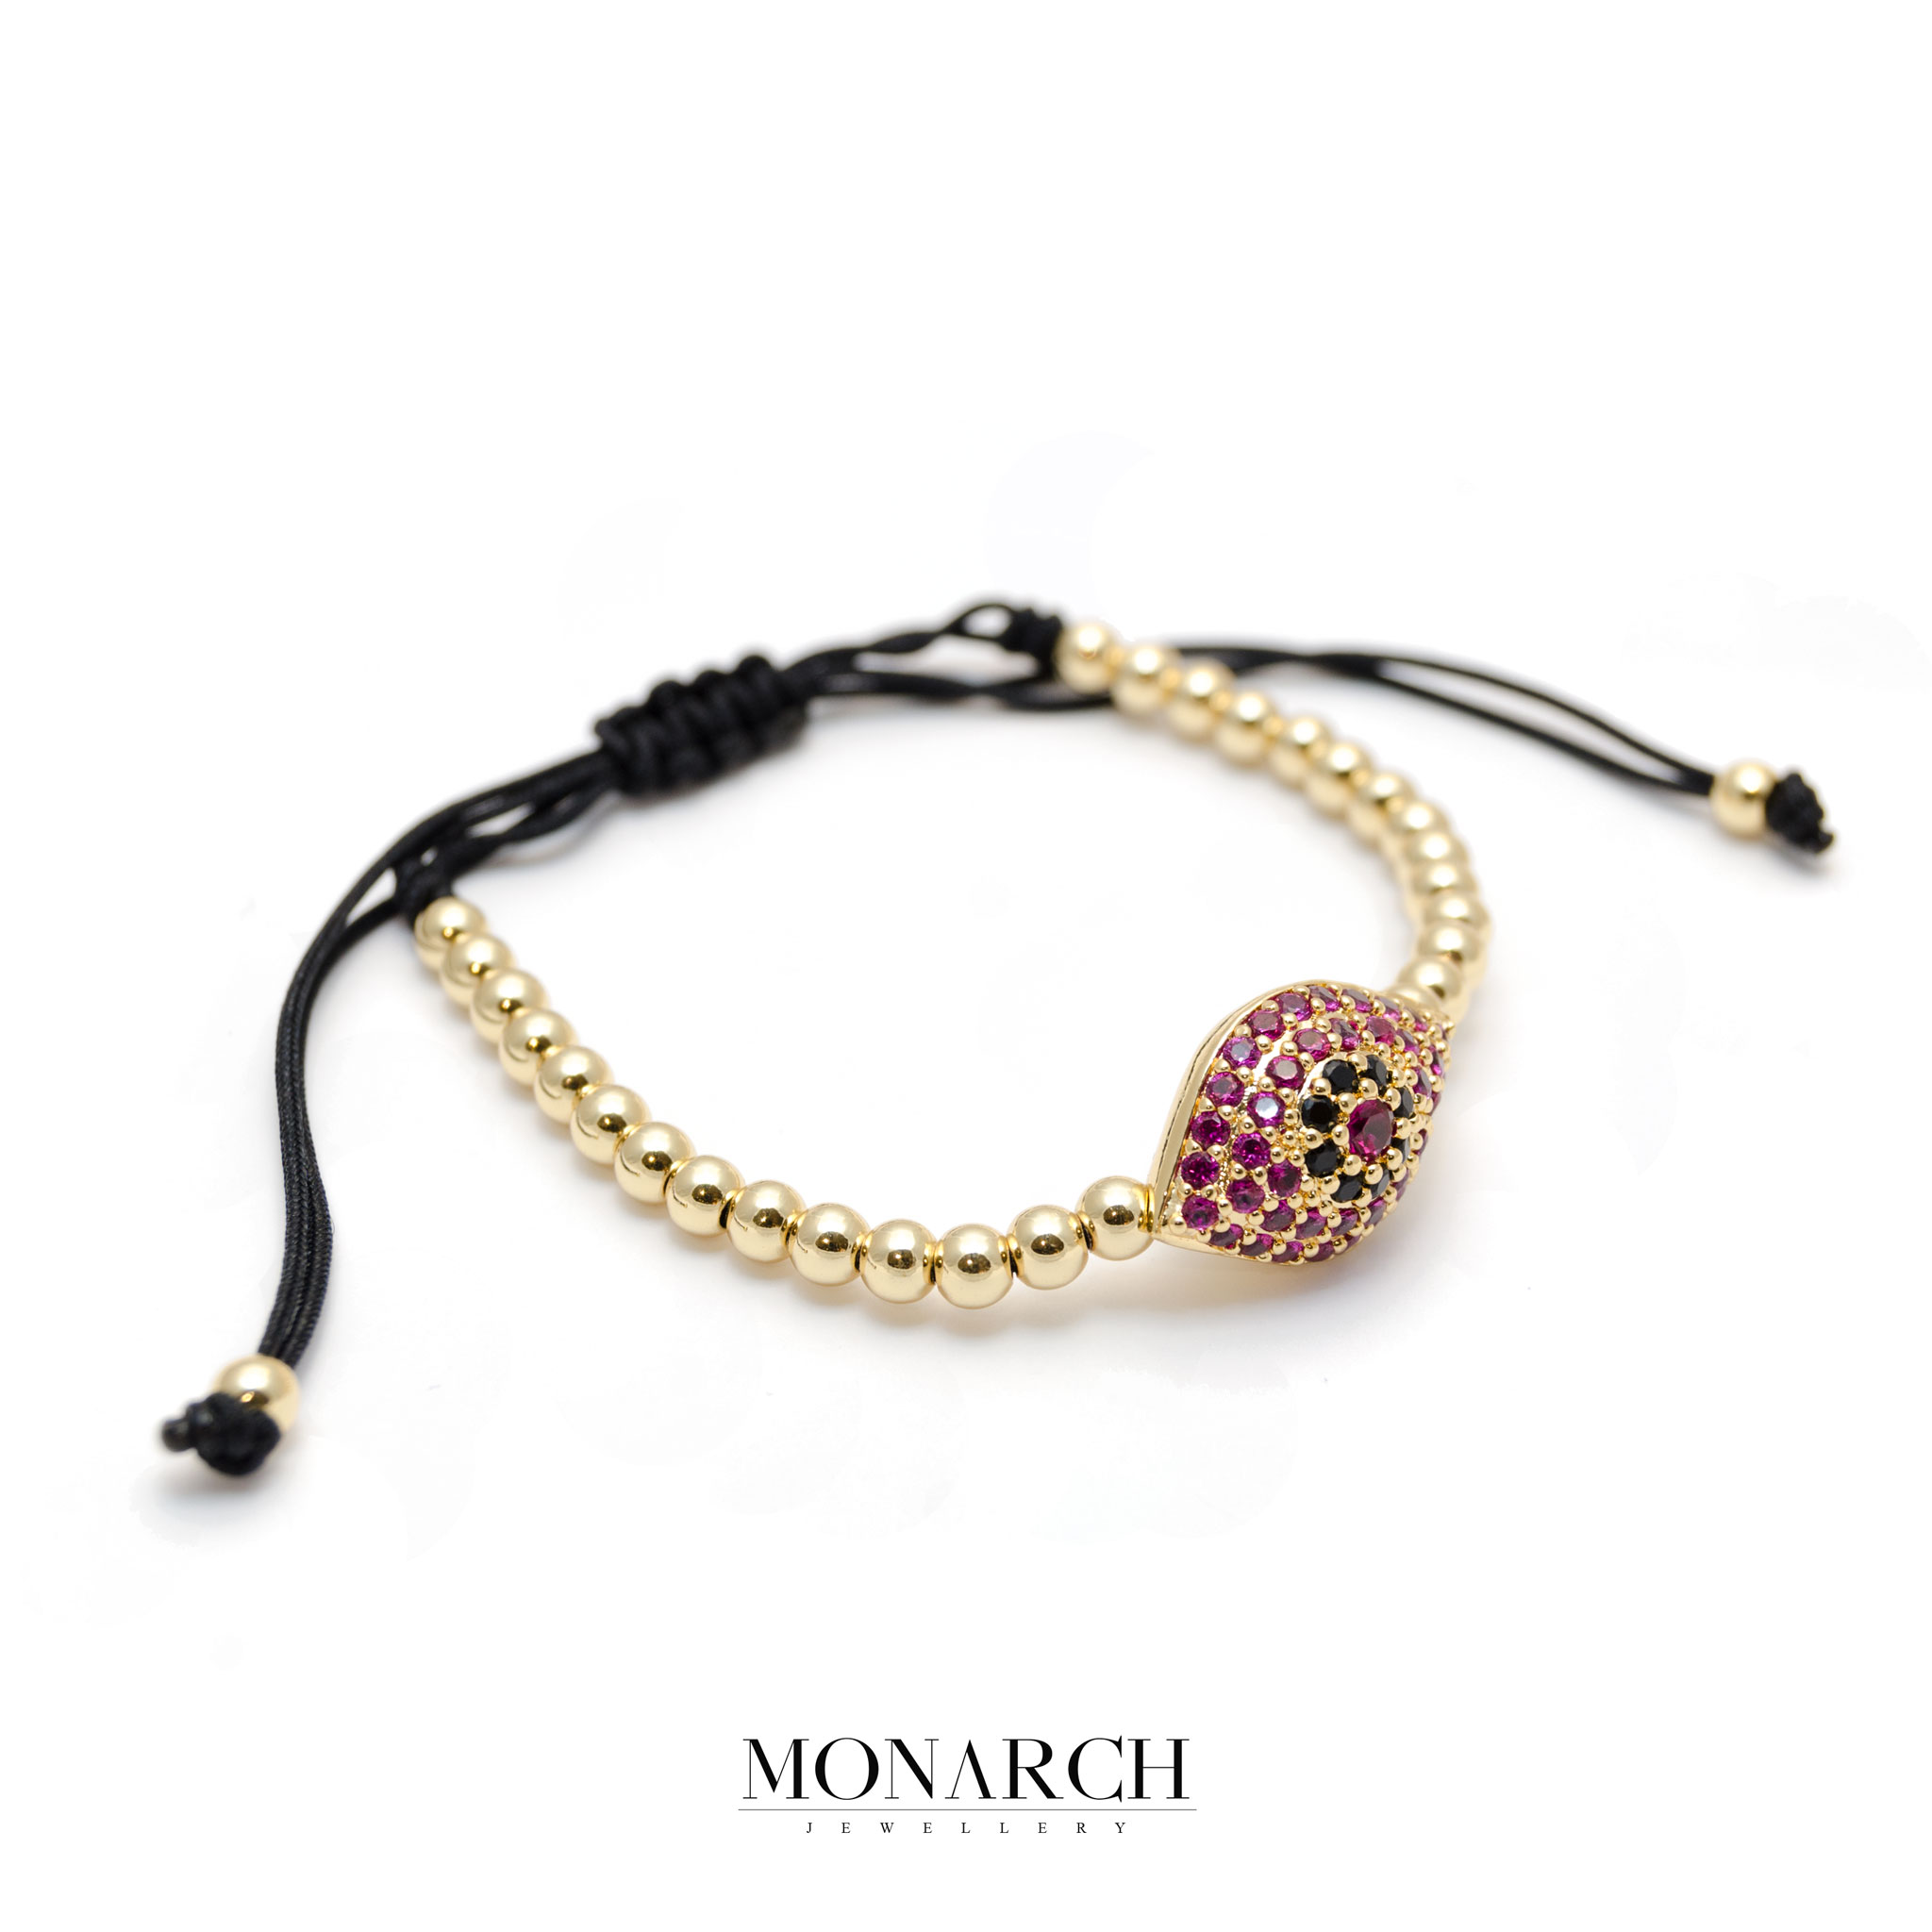 Monarch Jewellery 24k Gold Magenta Evil Eye Charm Macrame Bracelet